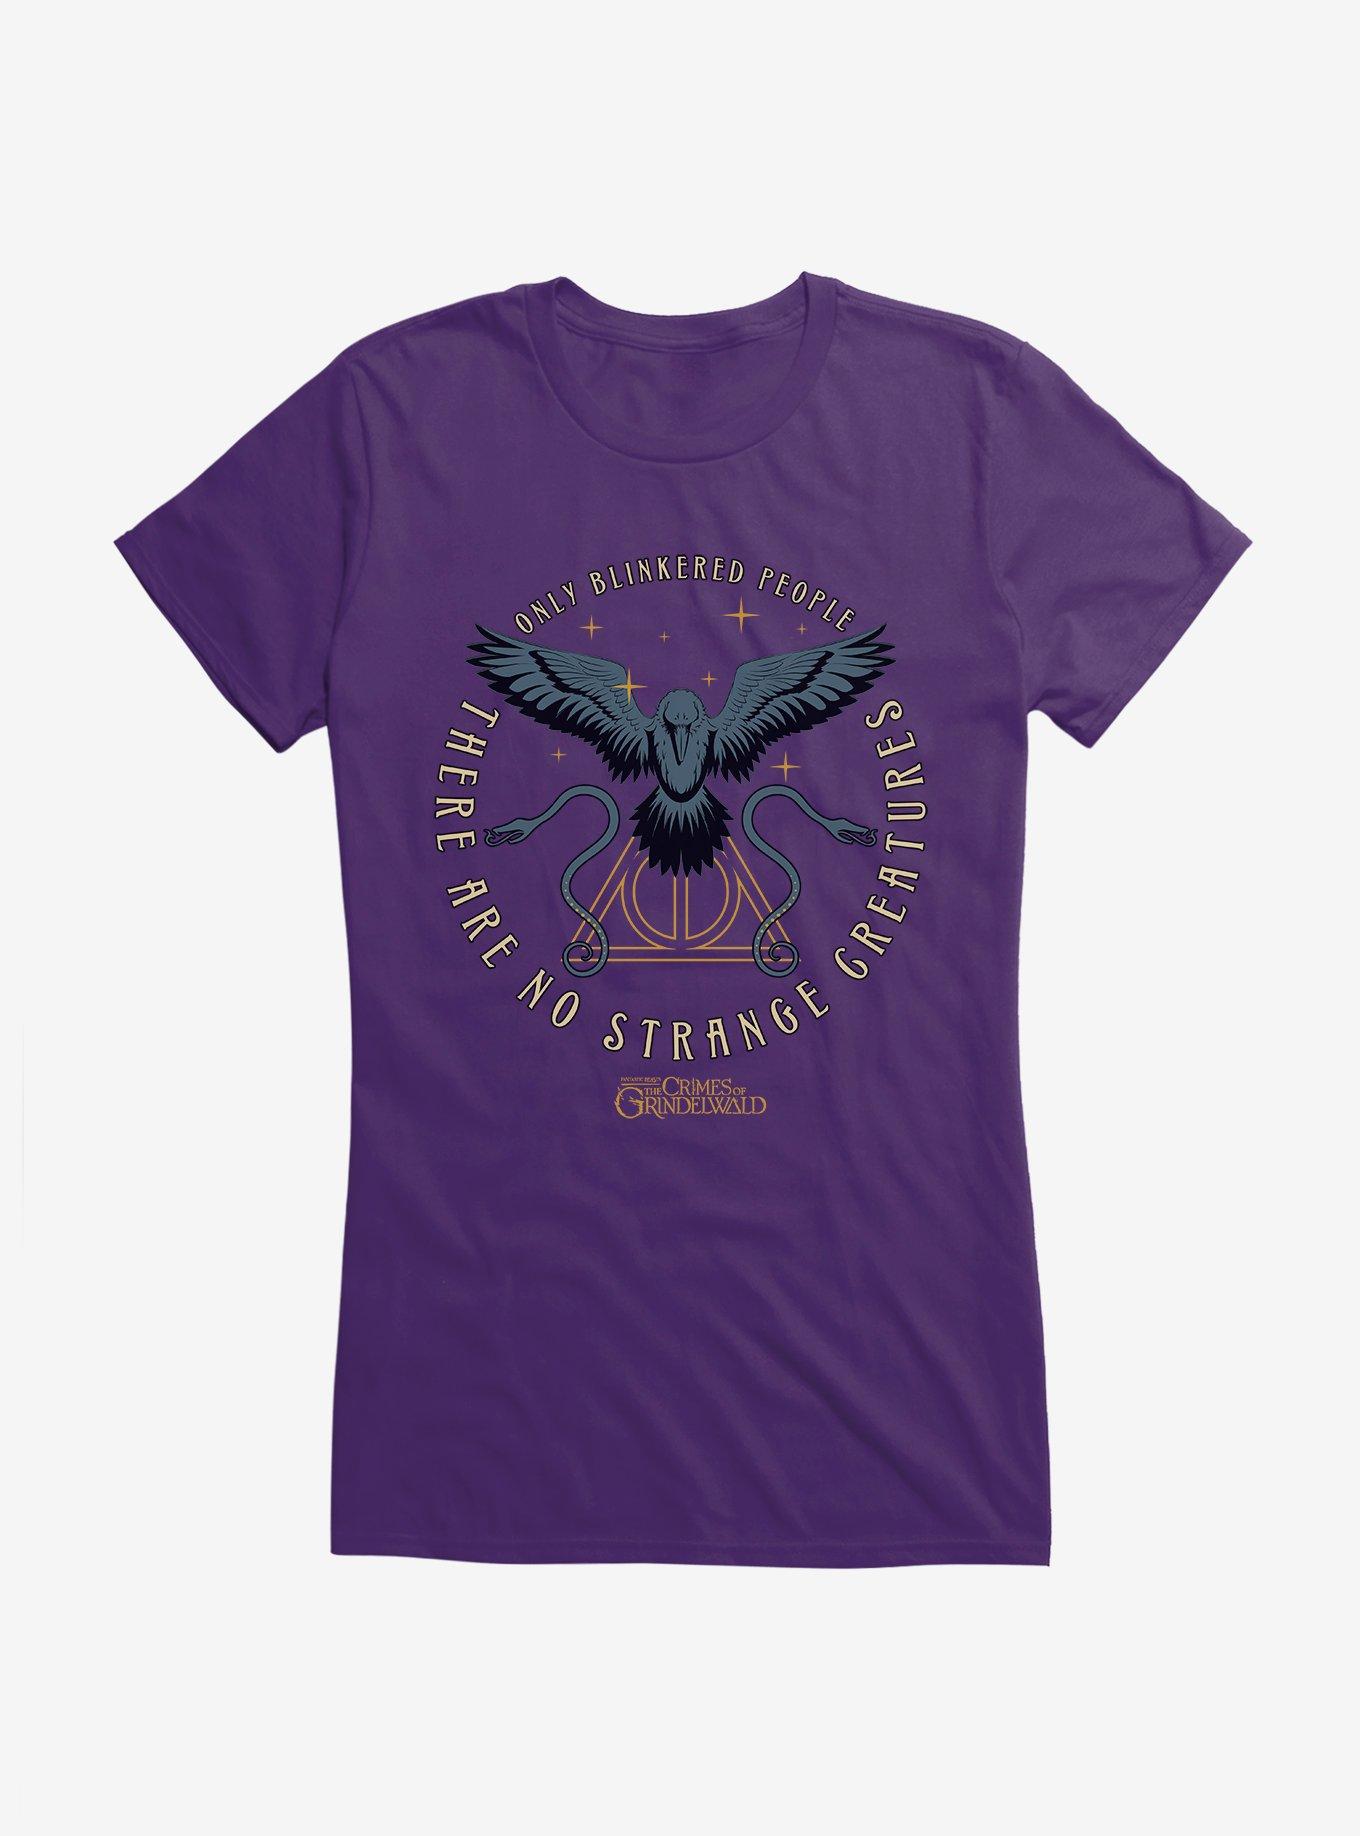 Fantastic Beasts Thunderbird Girls T-Shirt, PURPLE, hi-res